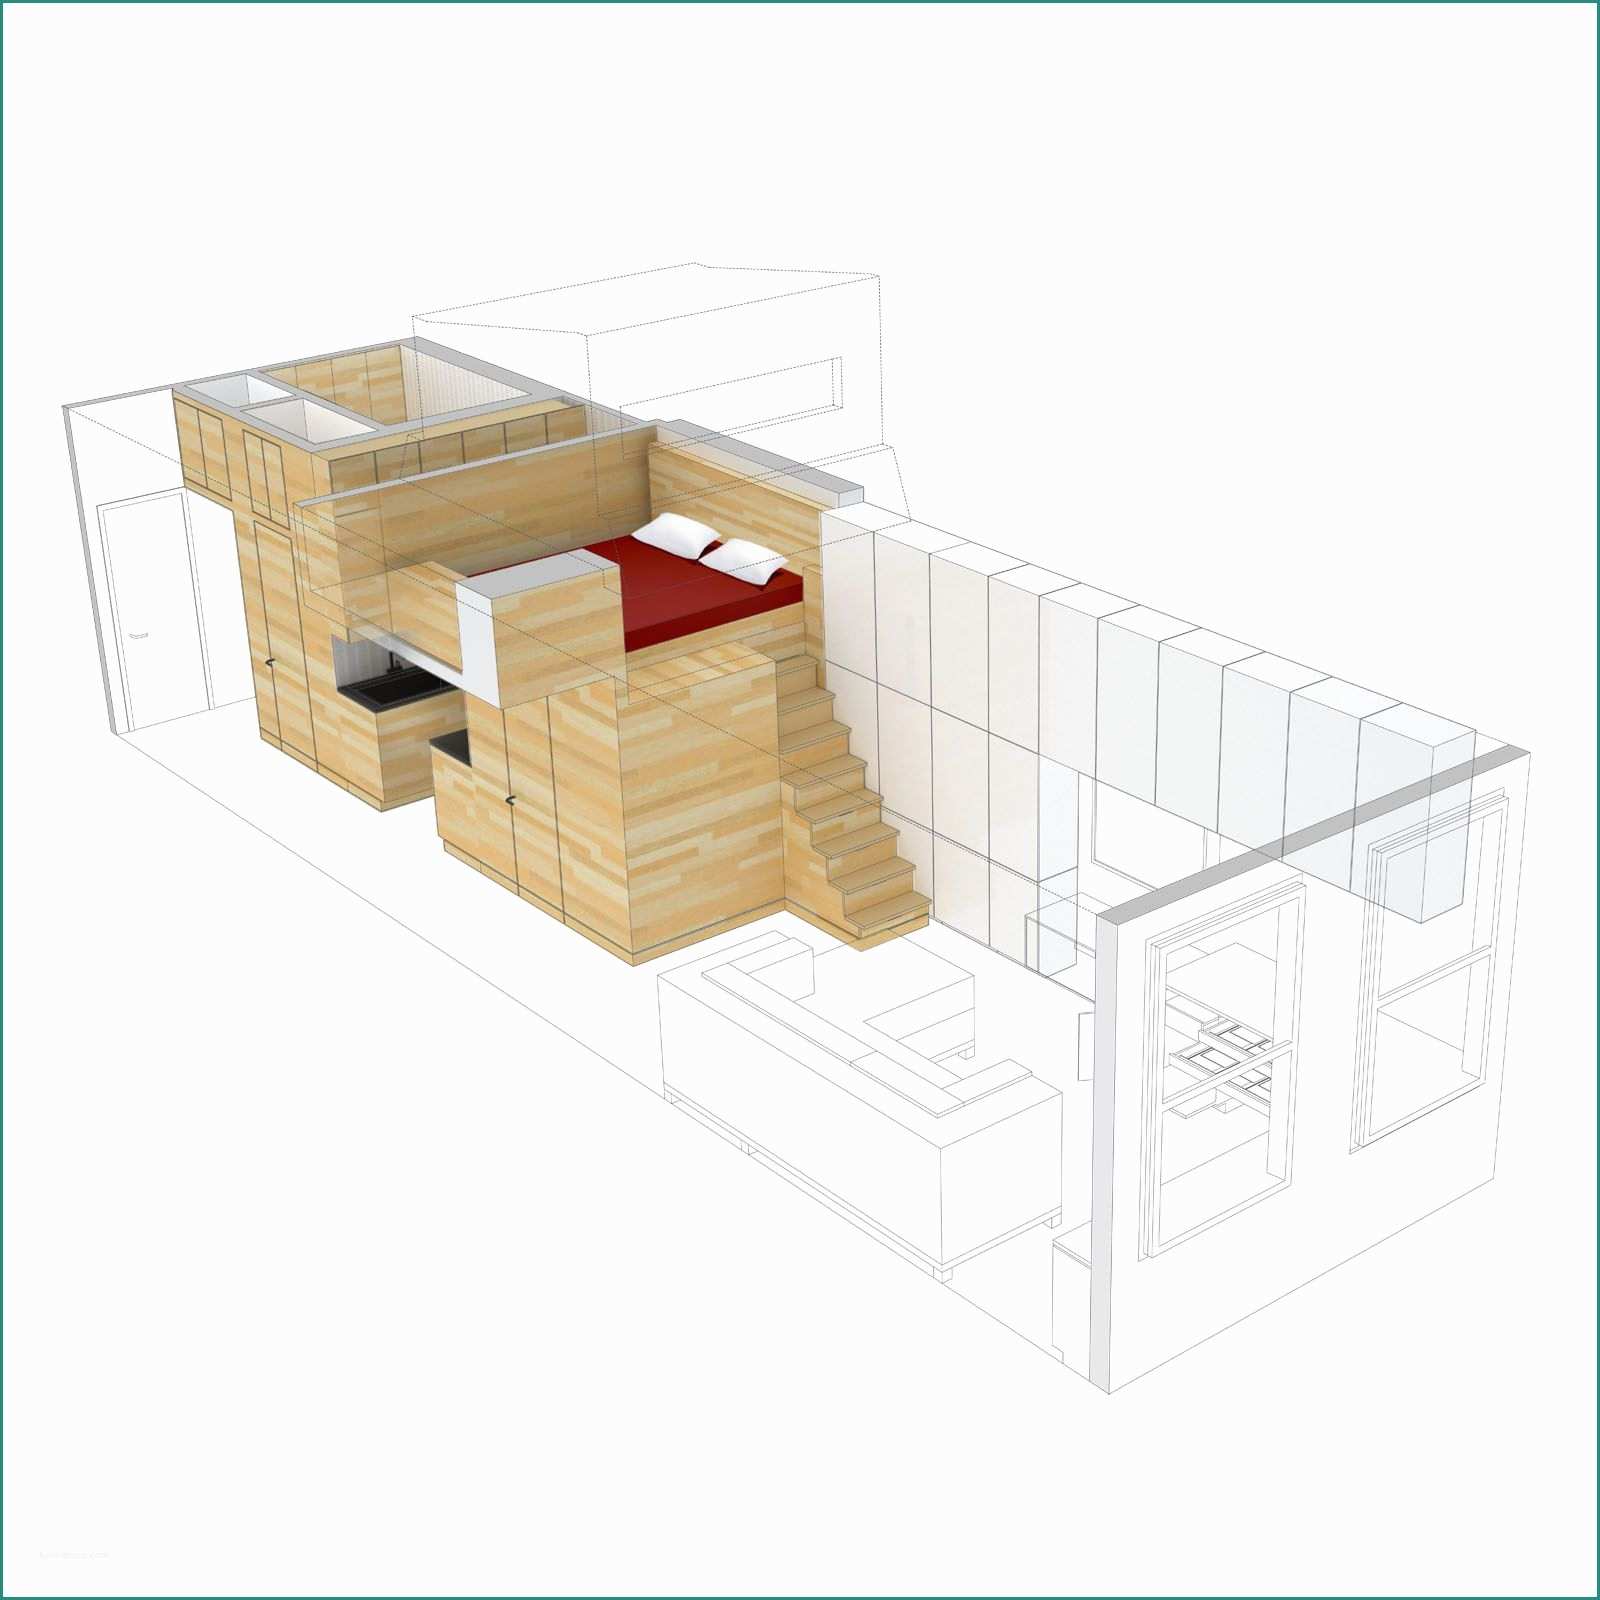 Box Bagno Prefabbricato E the Wooden Volume Separates the Apartment Into Various Zones